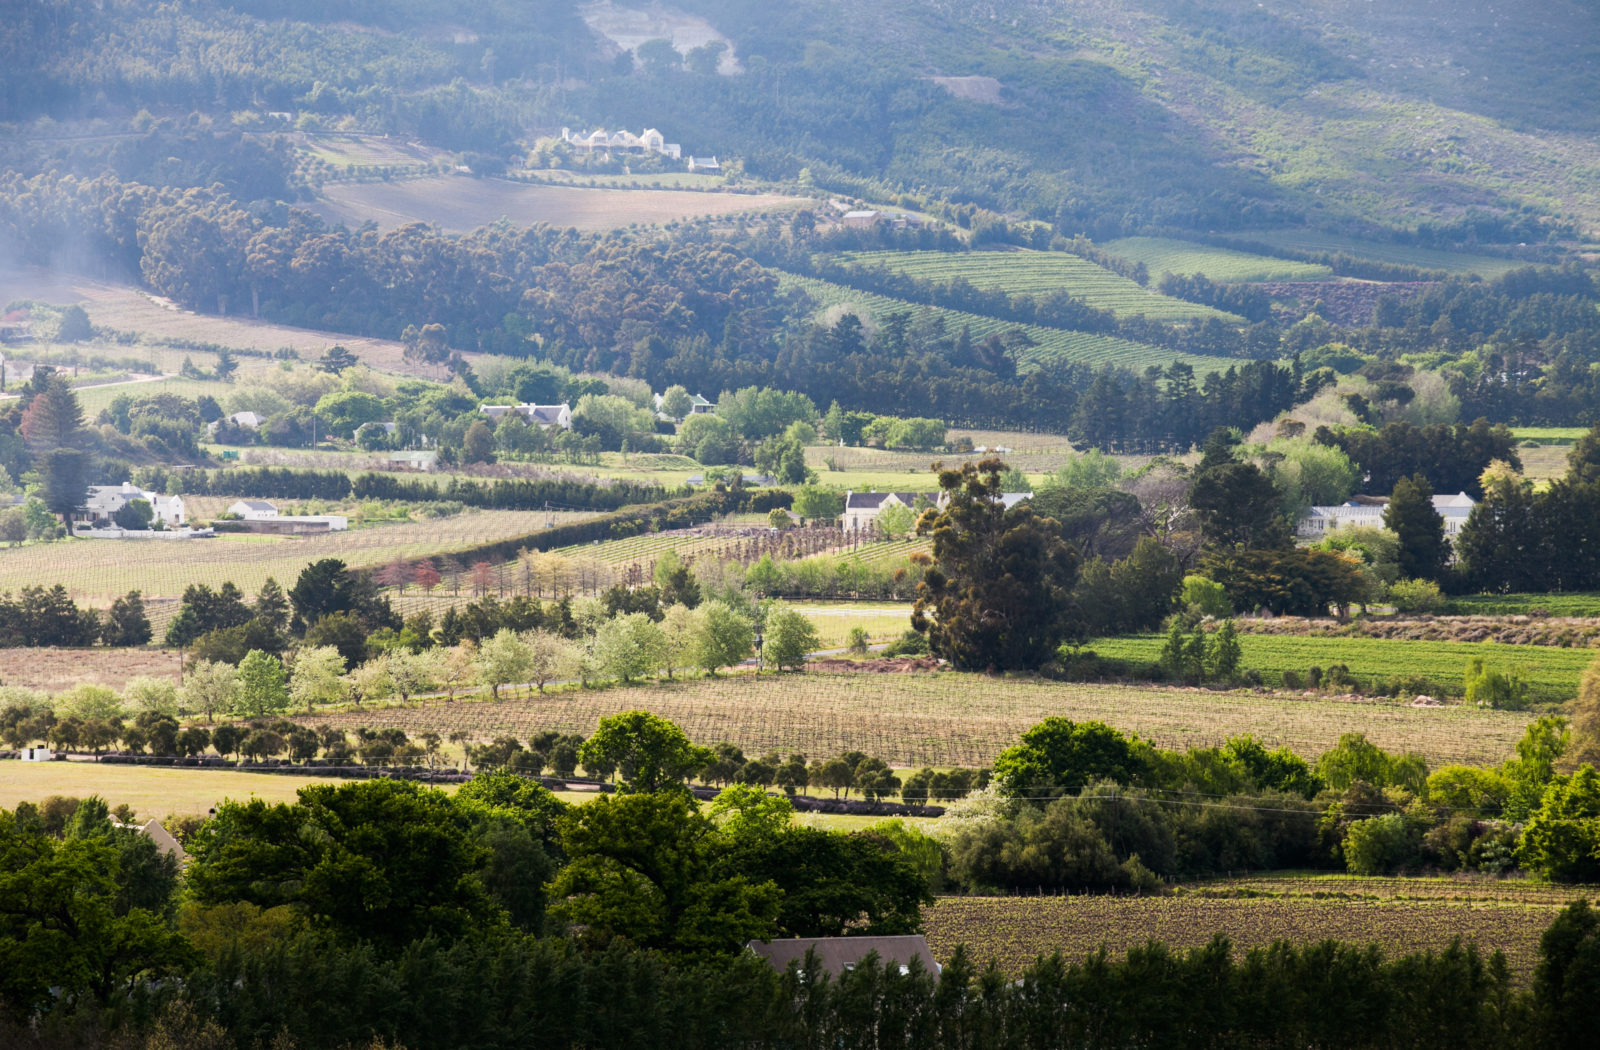 The beautiful Franschhoek wine valley